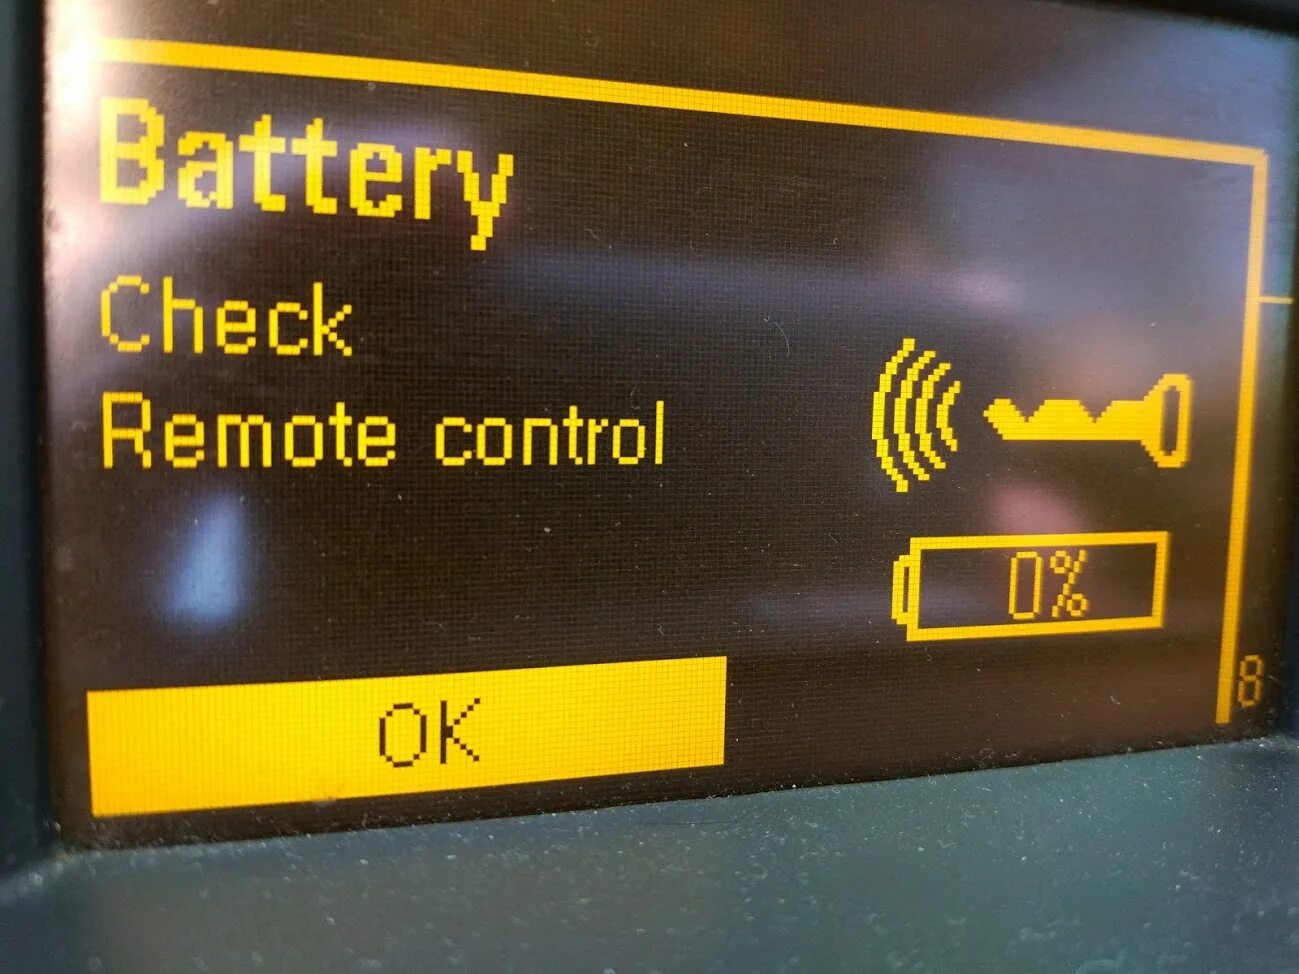 Check Remote Control Opel Astra h. Дисплей сервисной индикации Опель Вектра с.